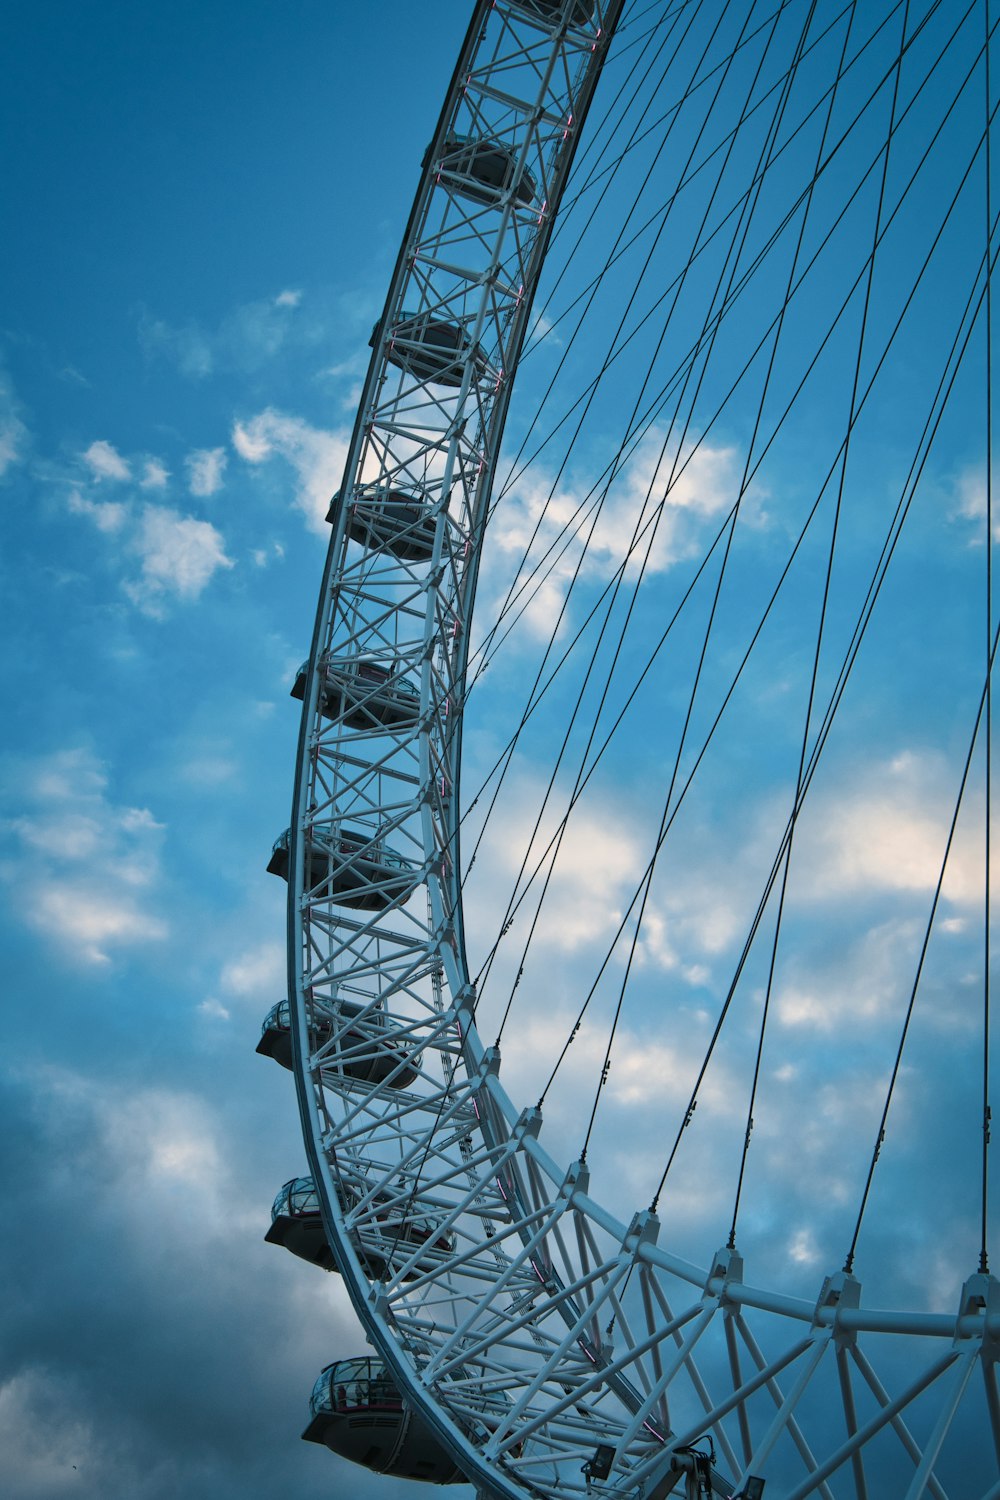 a large ferris wheel against a cloudy blue sky